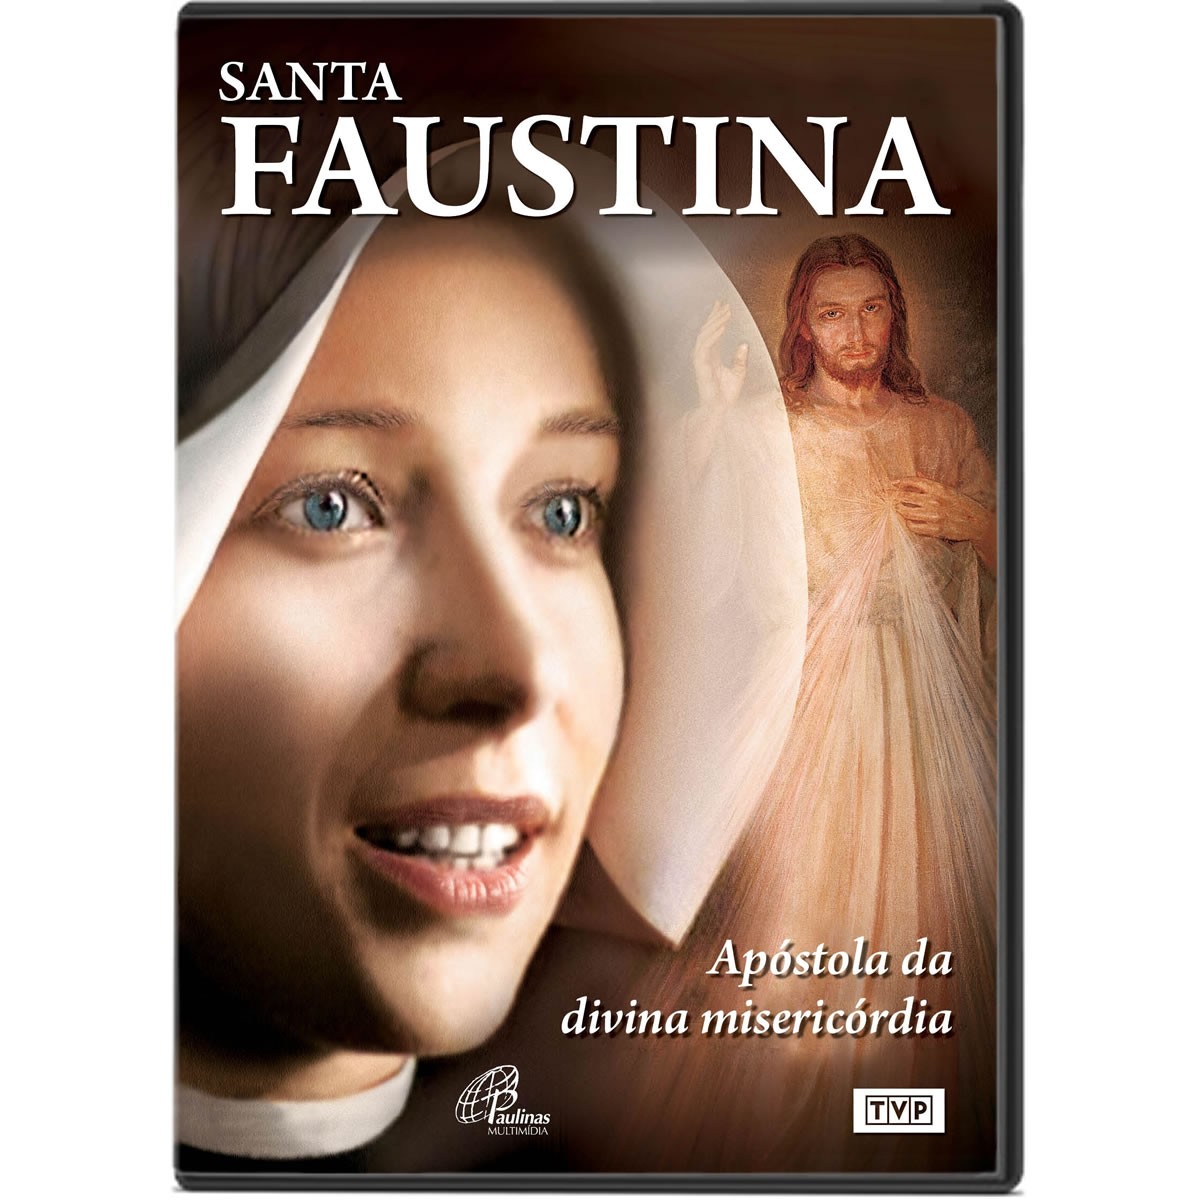 7891443171647 - DVD SANTA FAUSTINA APÓSTOLA DA DIVINA MISERICORDIA PAULINAS COMEP